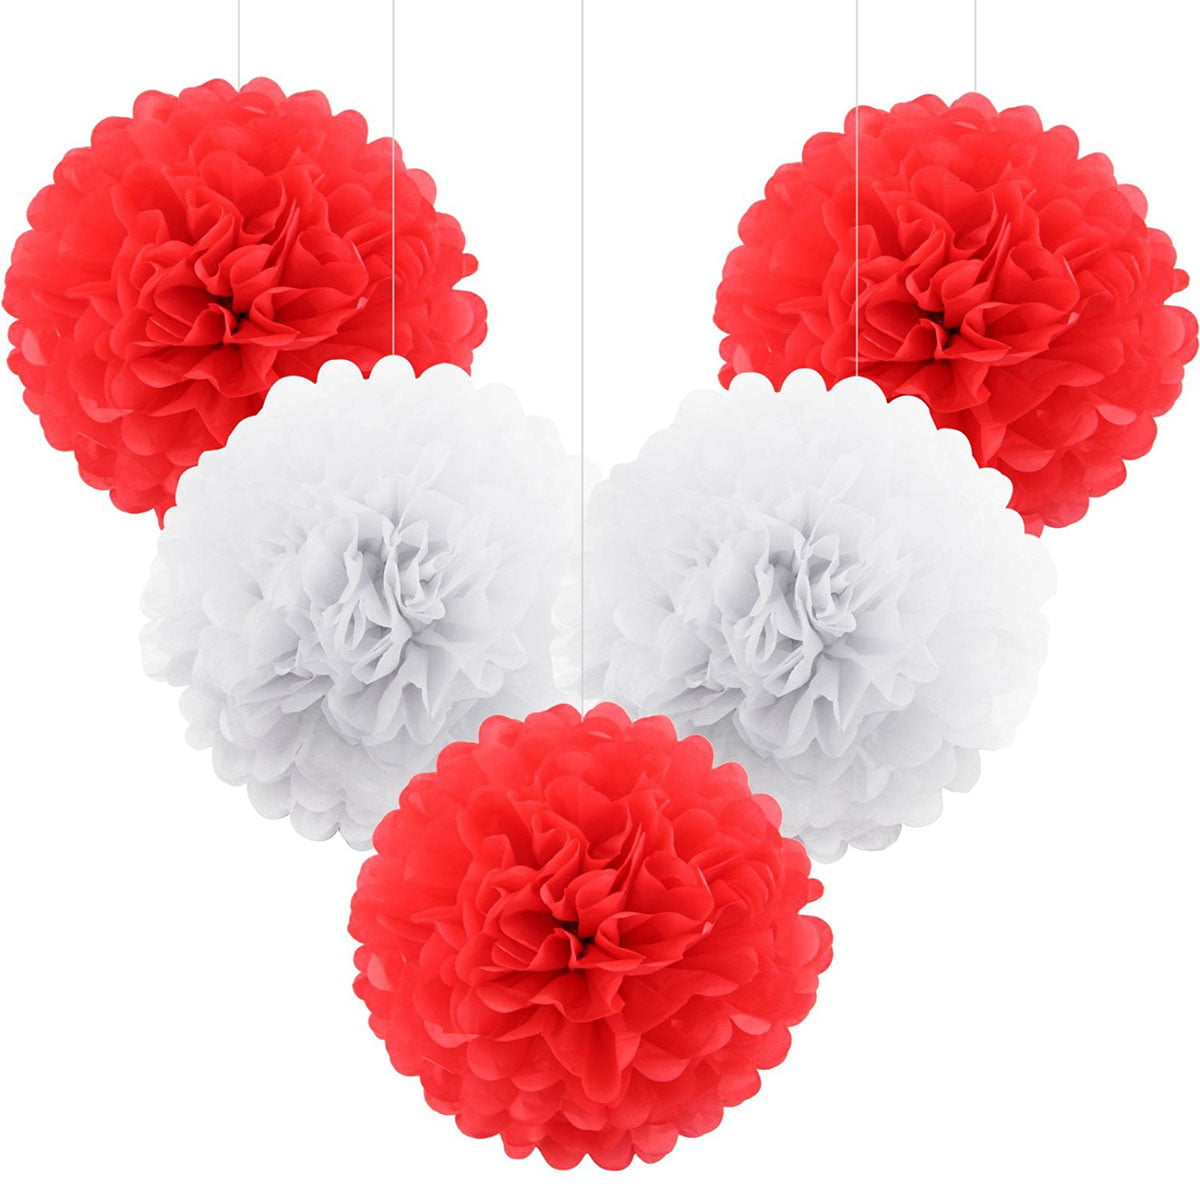 5pcs Tissue Paper Pom Poms Flower Balls Wedding Party Decor Supplies A11US 